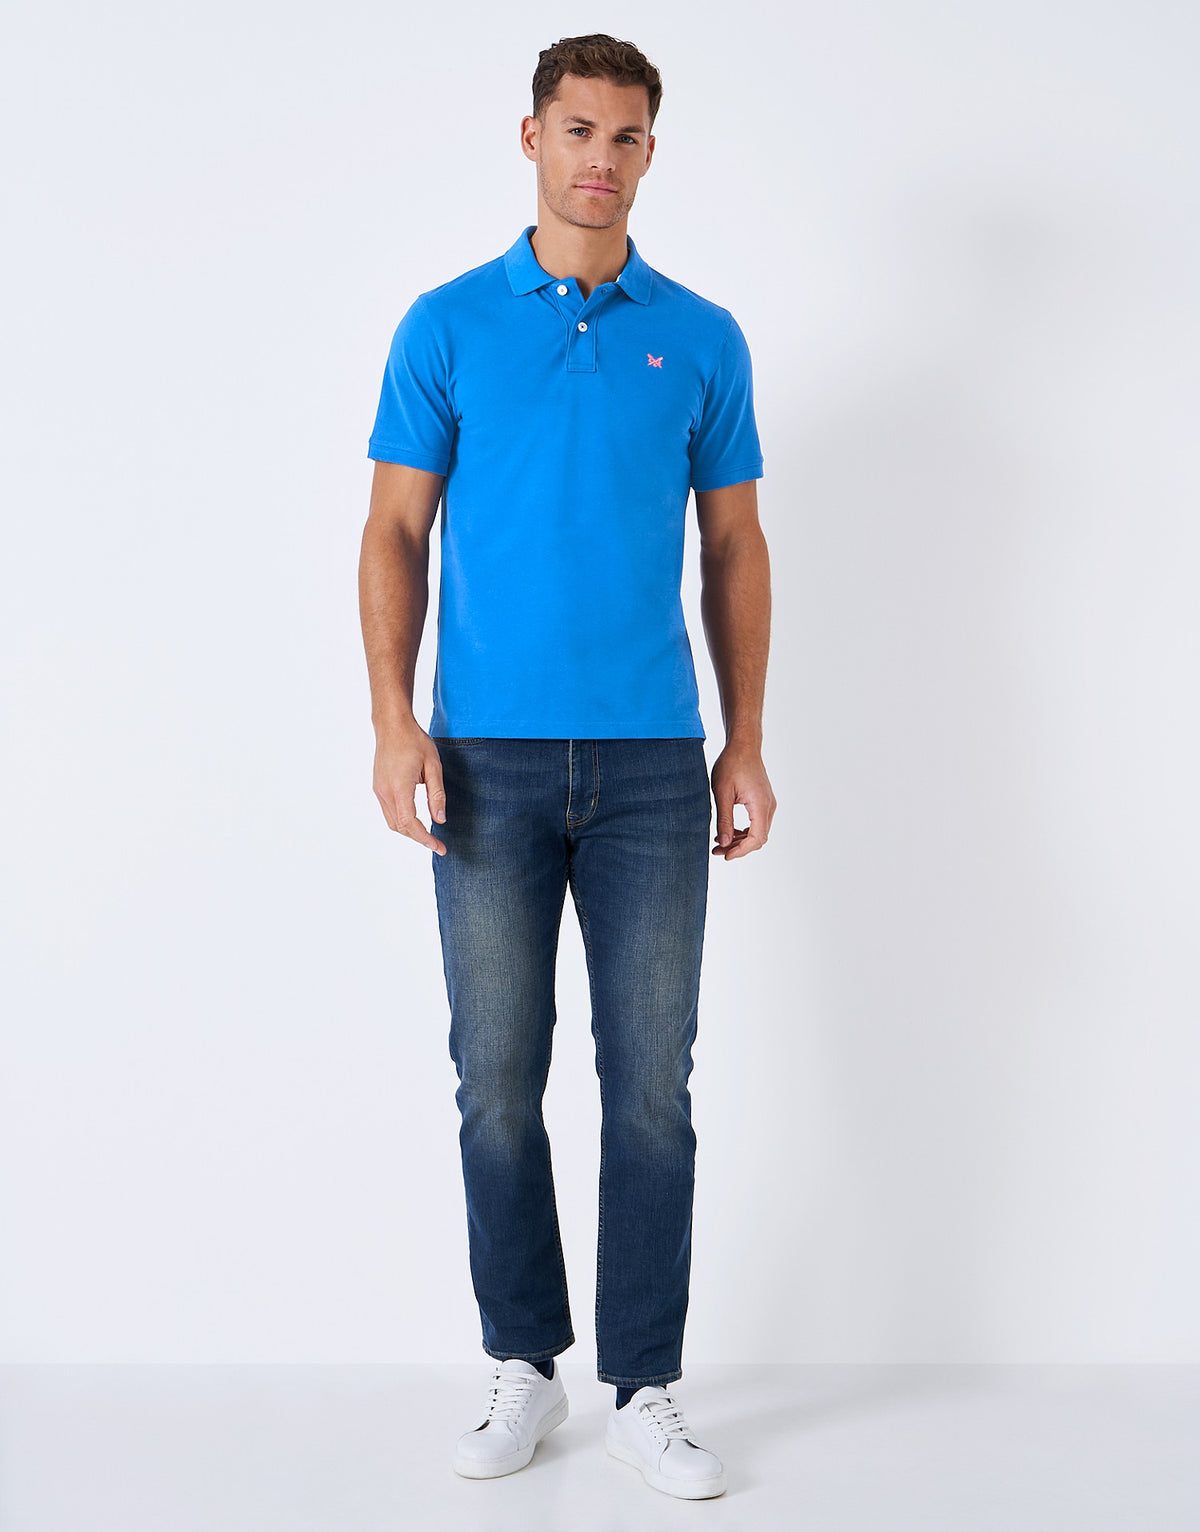 Crew Clothing Mens Pique Polo Shirt 'Classic Pique Polo' - Short Sleeved, 02, Mke002, Victoria Blue